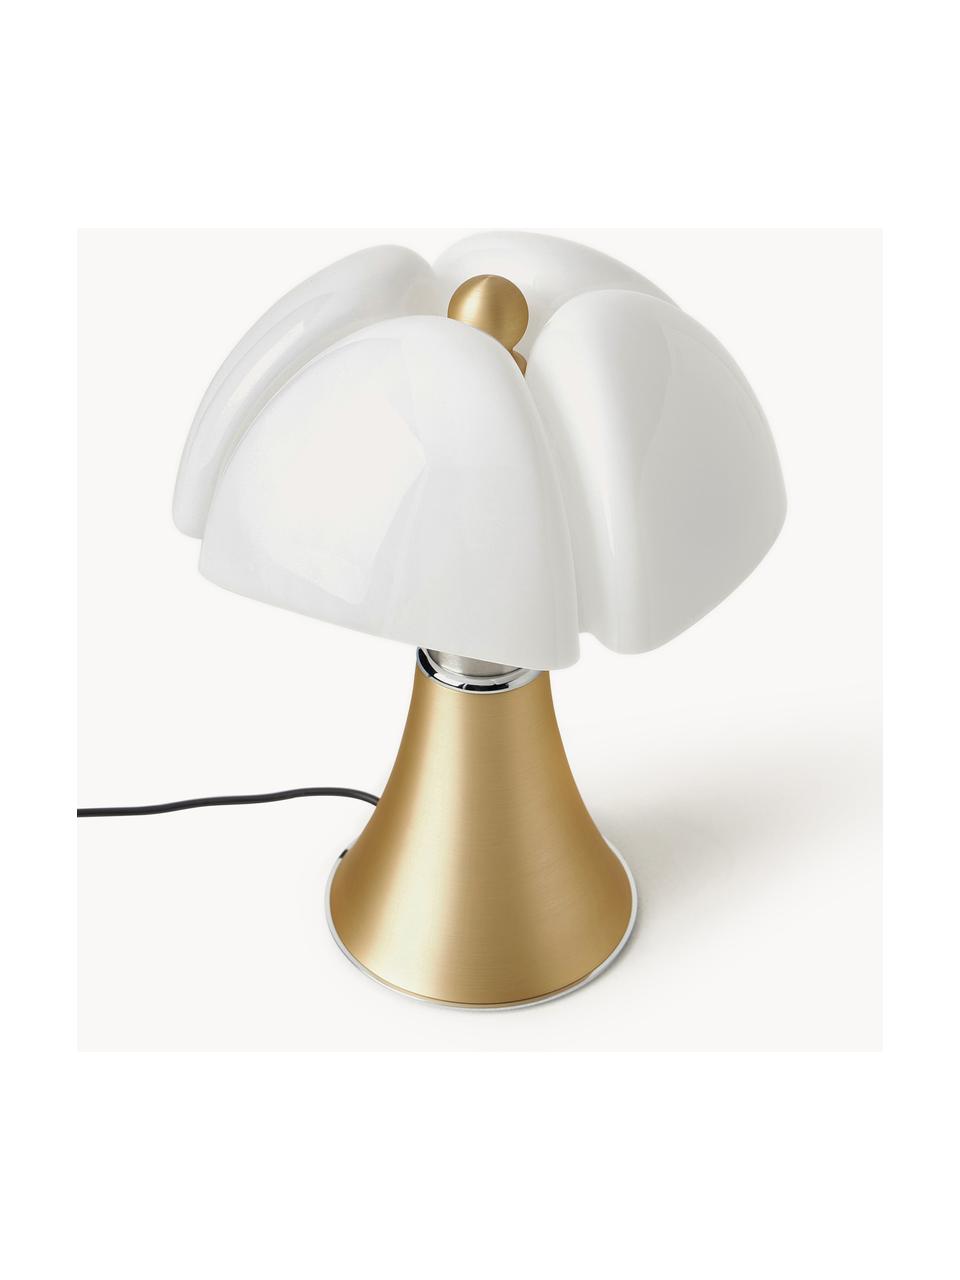 Dimmbare LED-Tischlampe Pipistrello, Goldfarben, matt, Ø 27 x H 35 cm